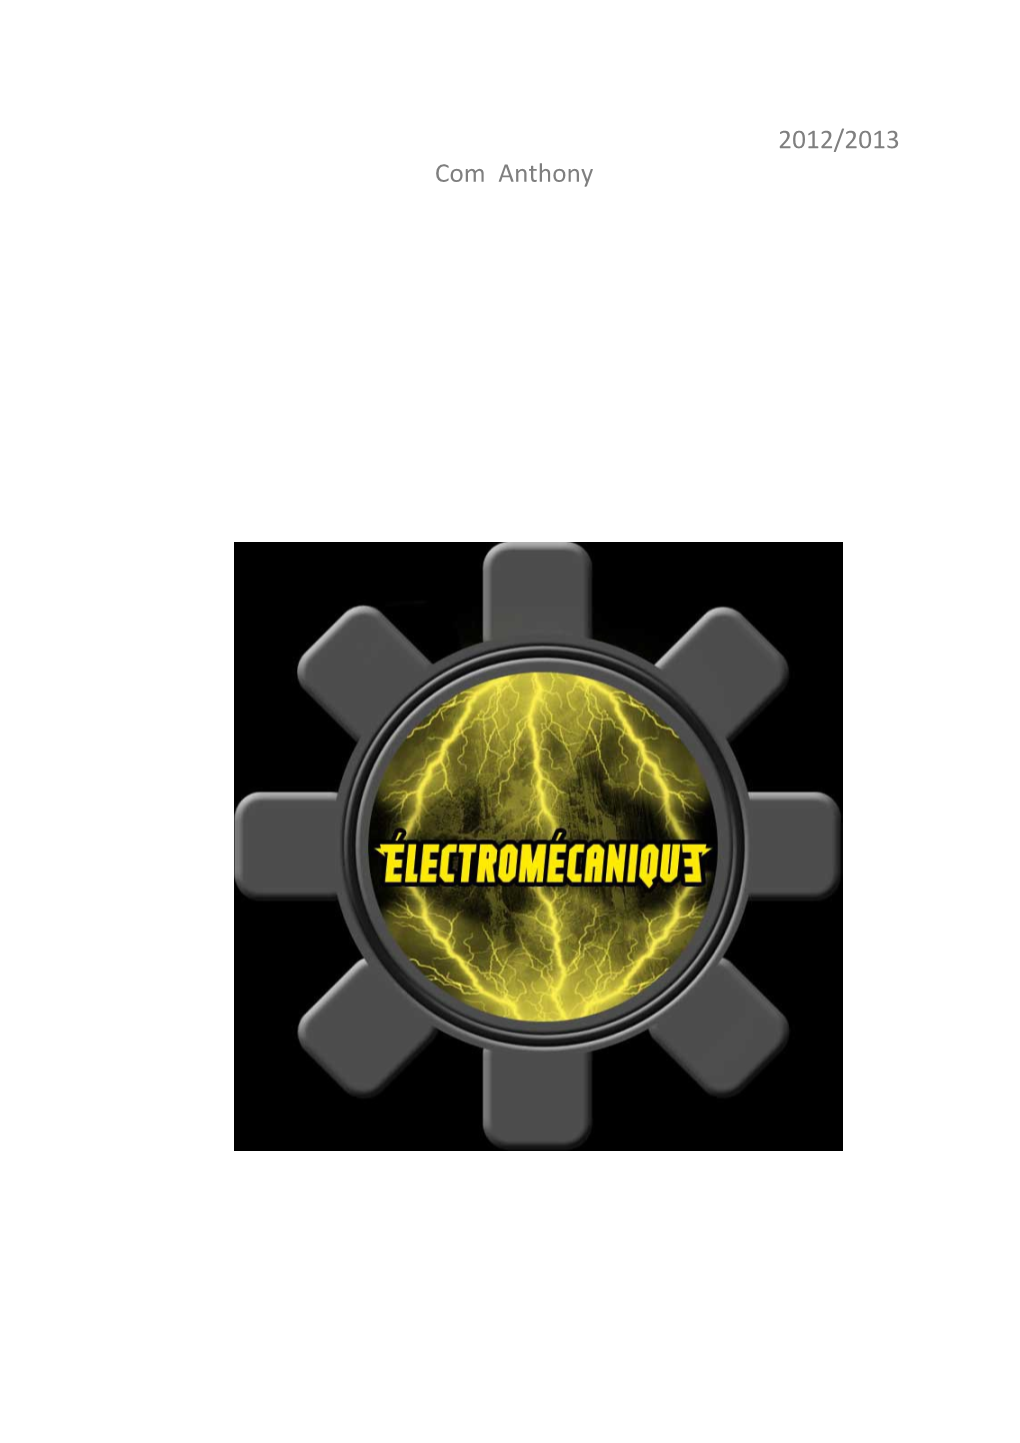 RESUME : ELECTROMECHANICAL Engineer